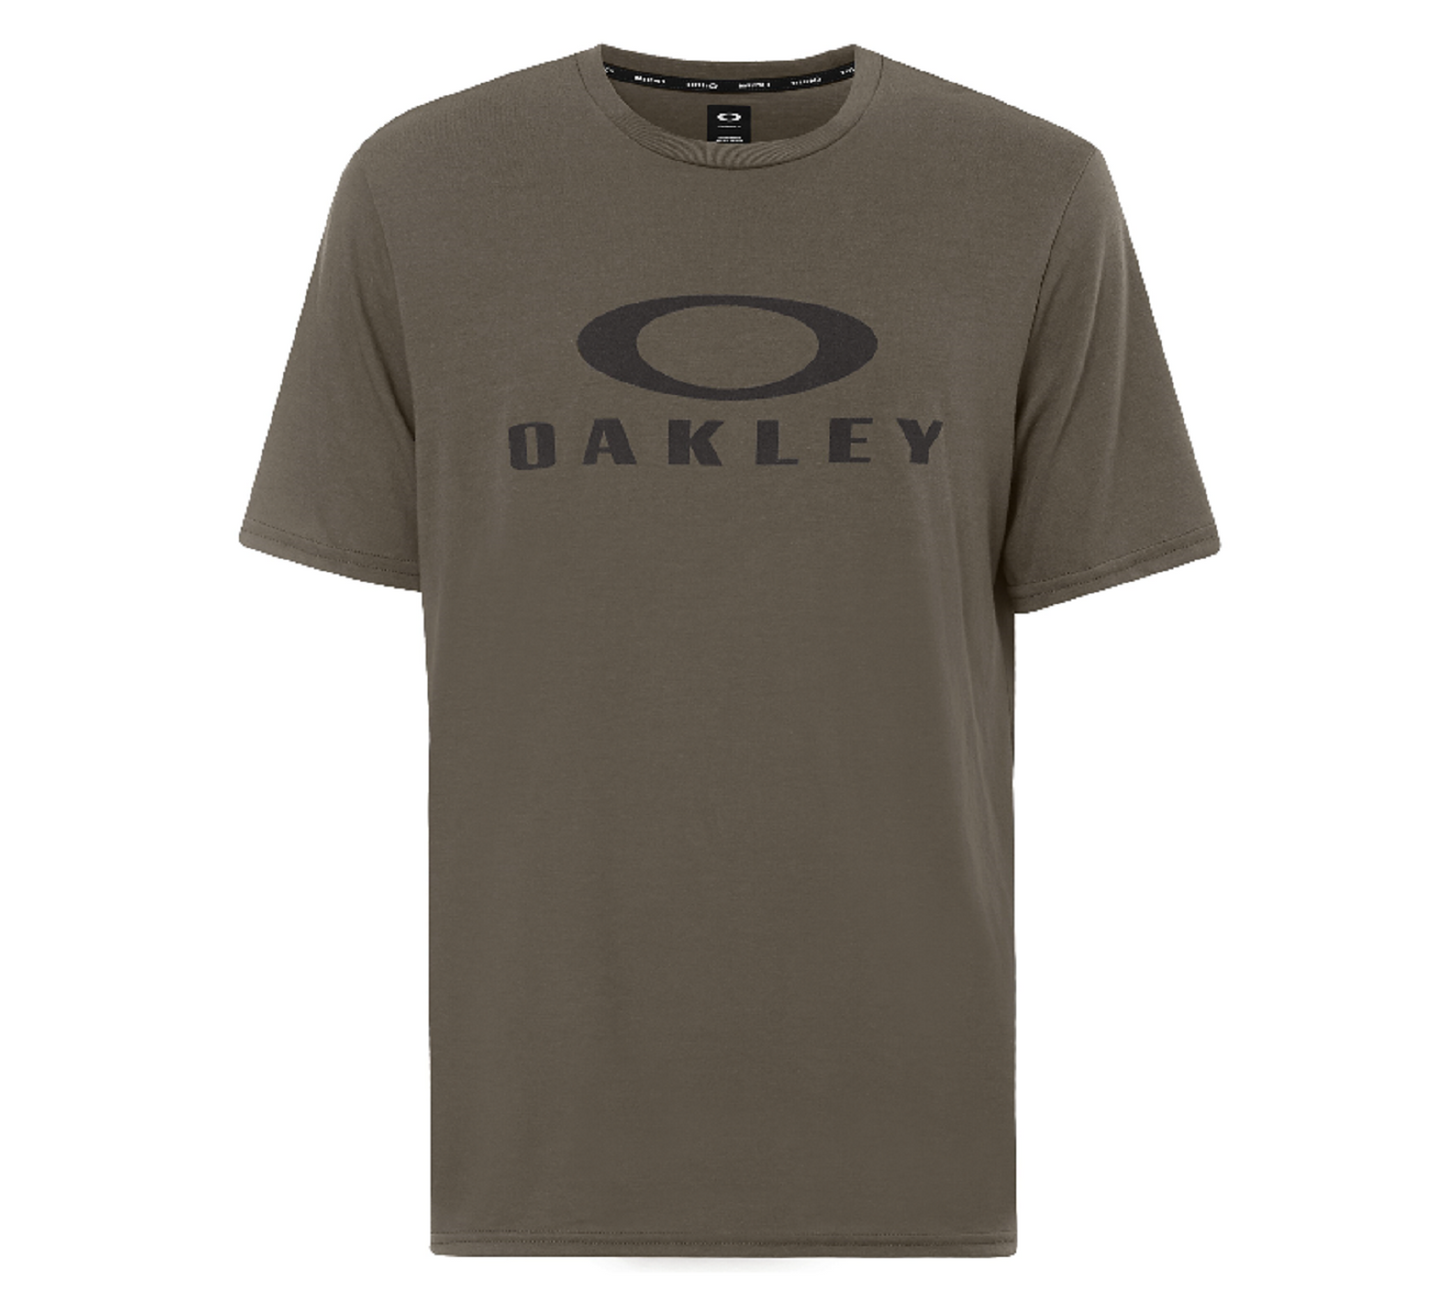 OAKLEY DARK BRUSH T-SHIRT